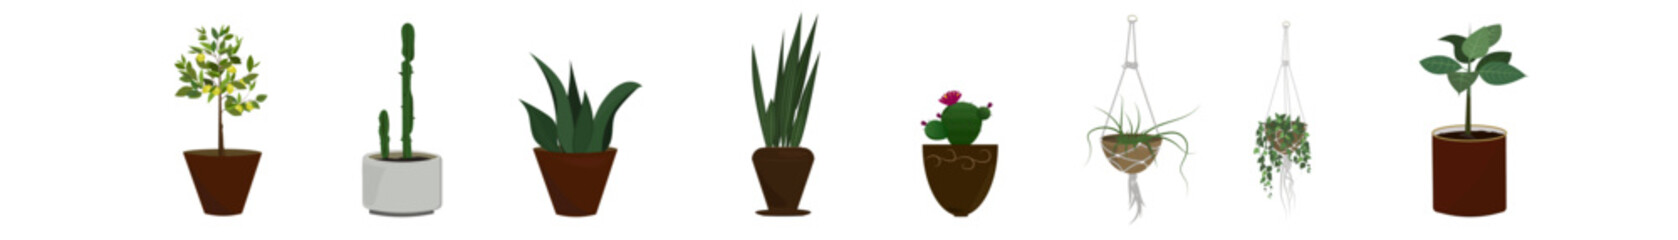 Set of houseplants in flowerpots. Hand drawn vector illustration